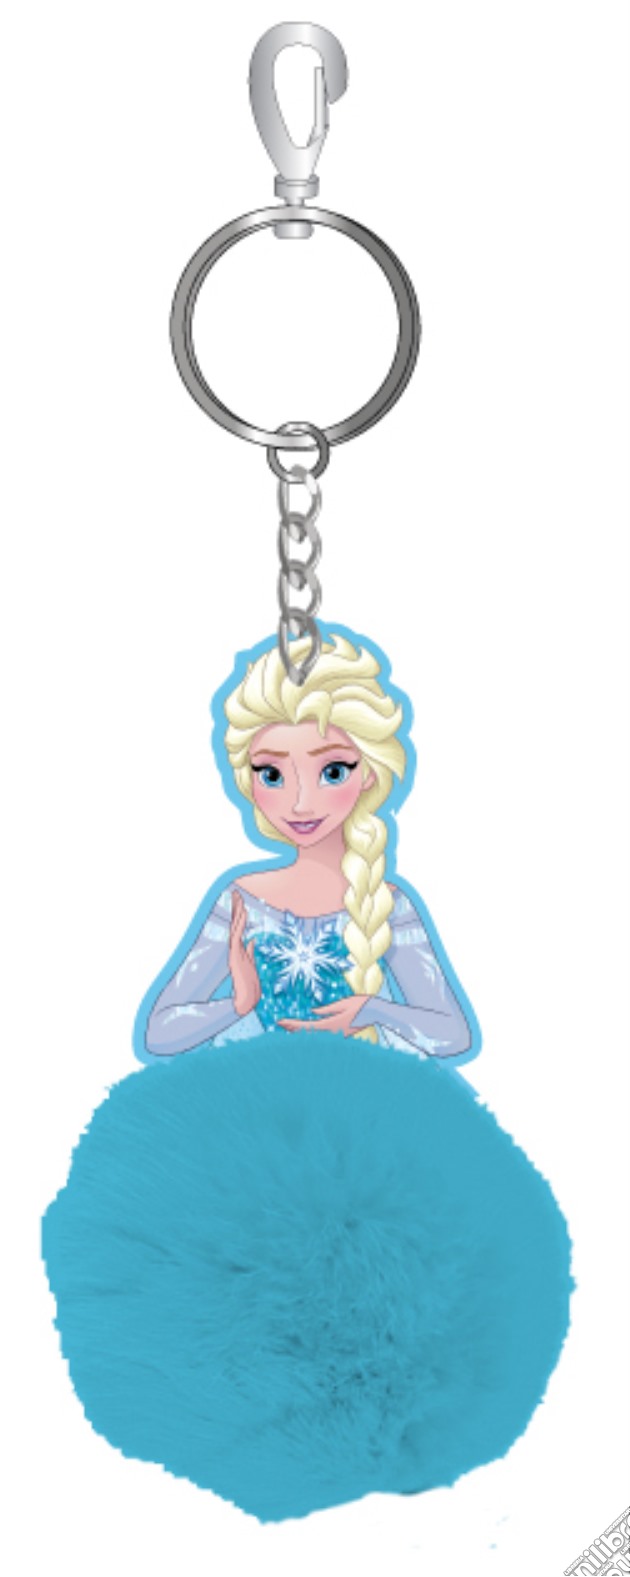 Disney: Joy Toy - Frozen Elsa Portachiavi Con Pon Pon 4X8 Cm gioco di Joy Toy